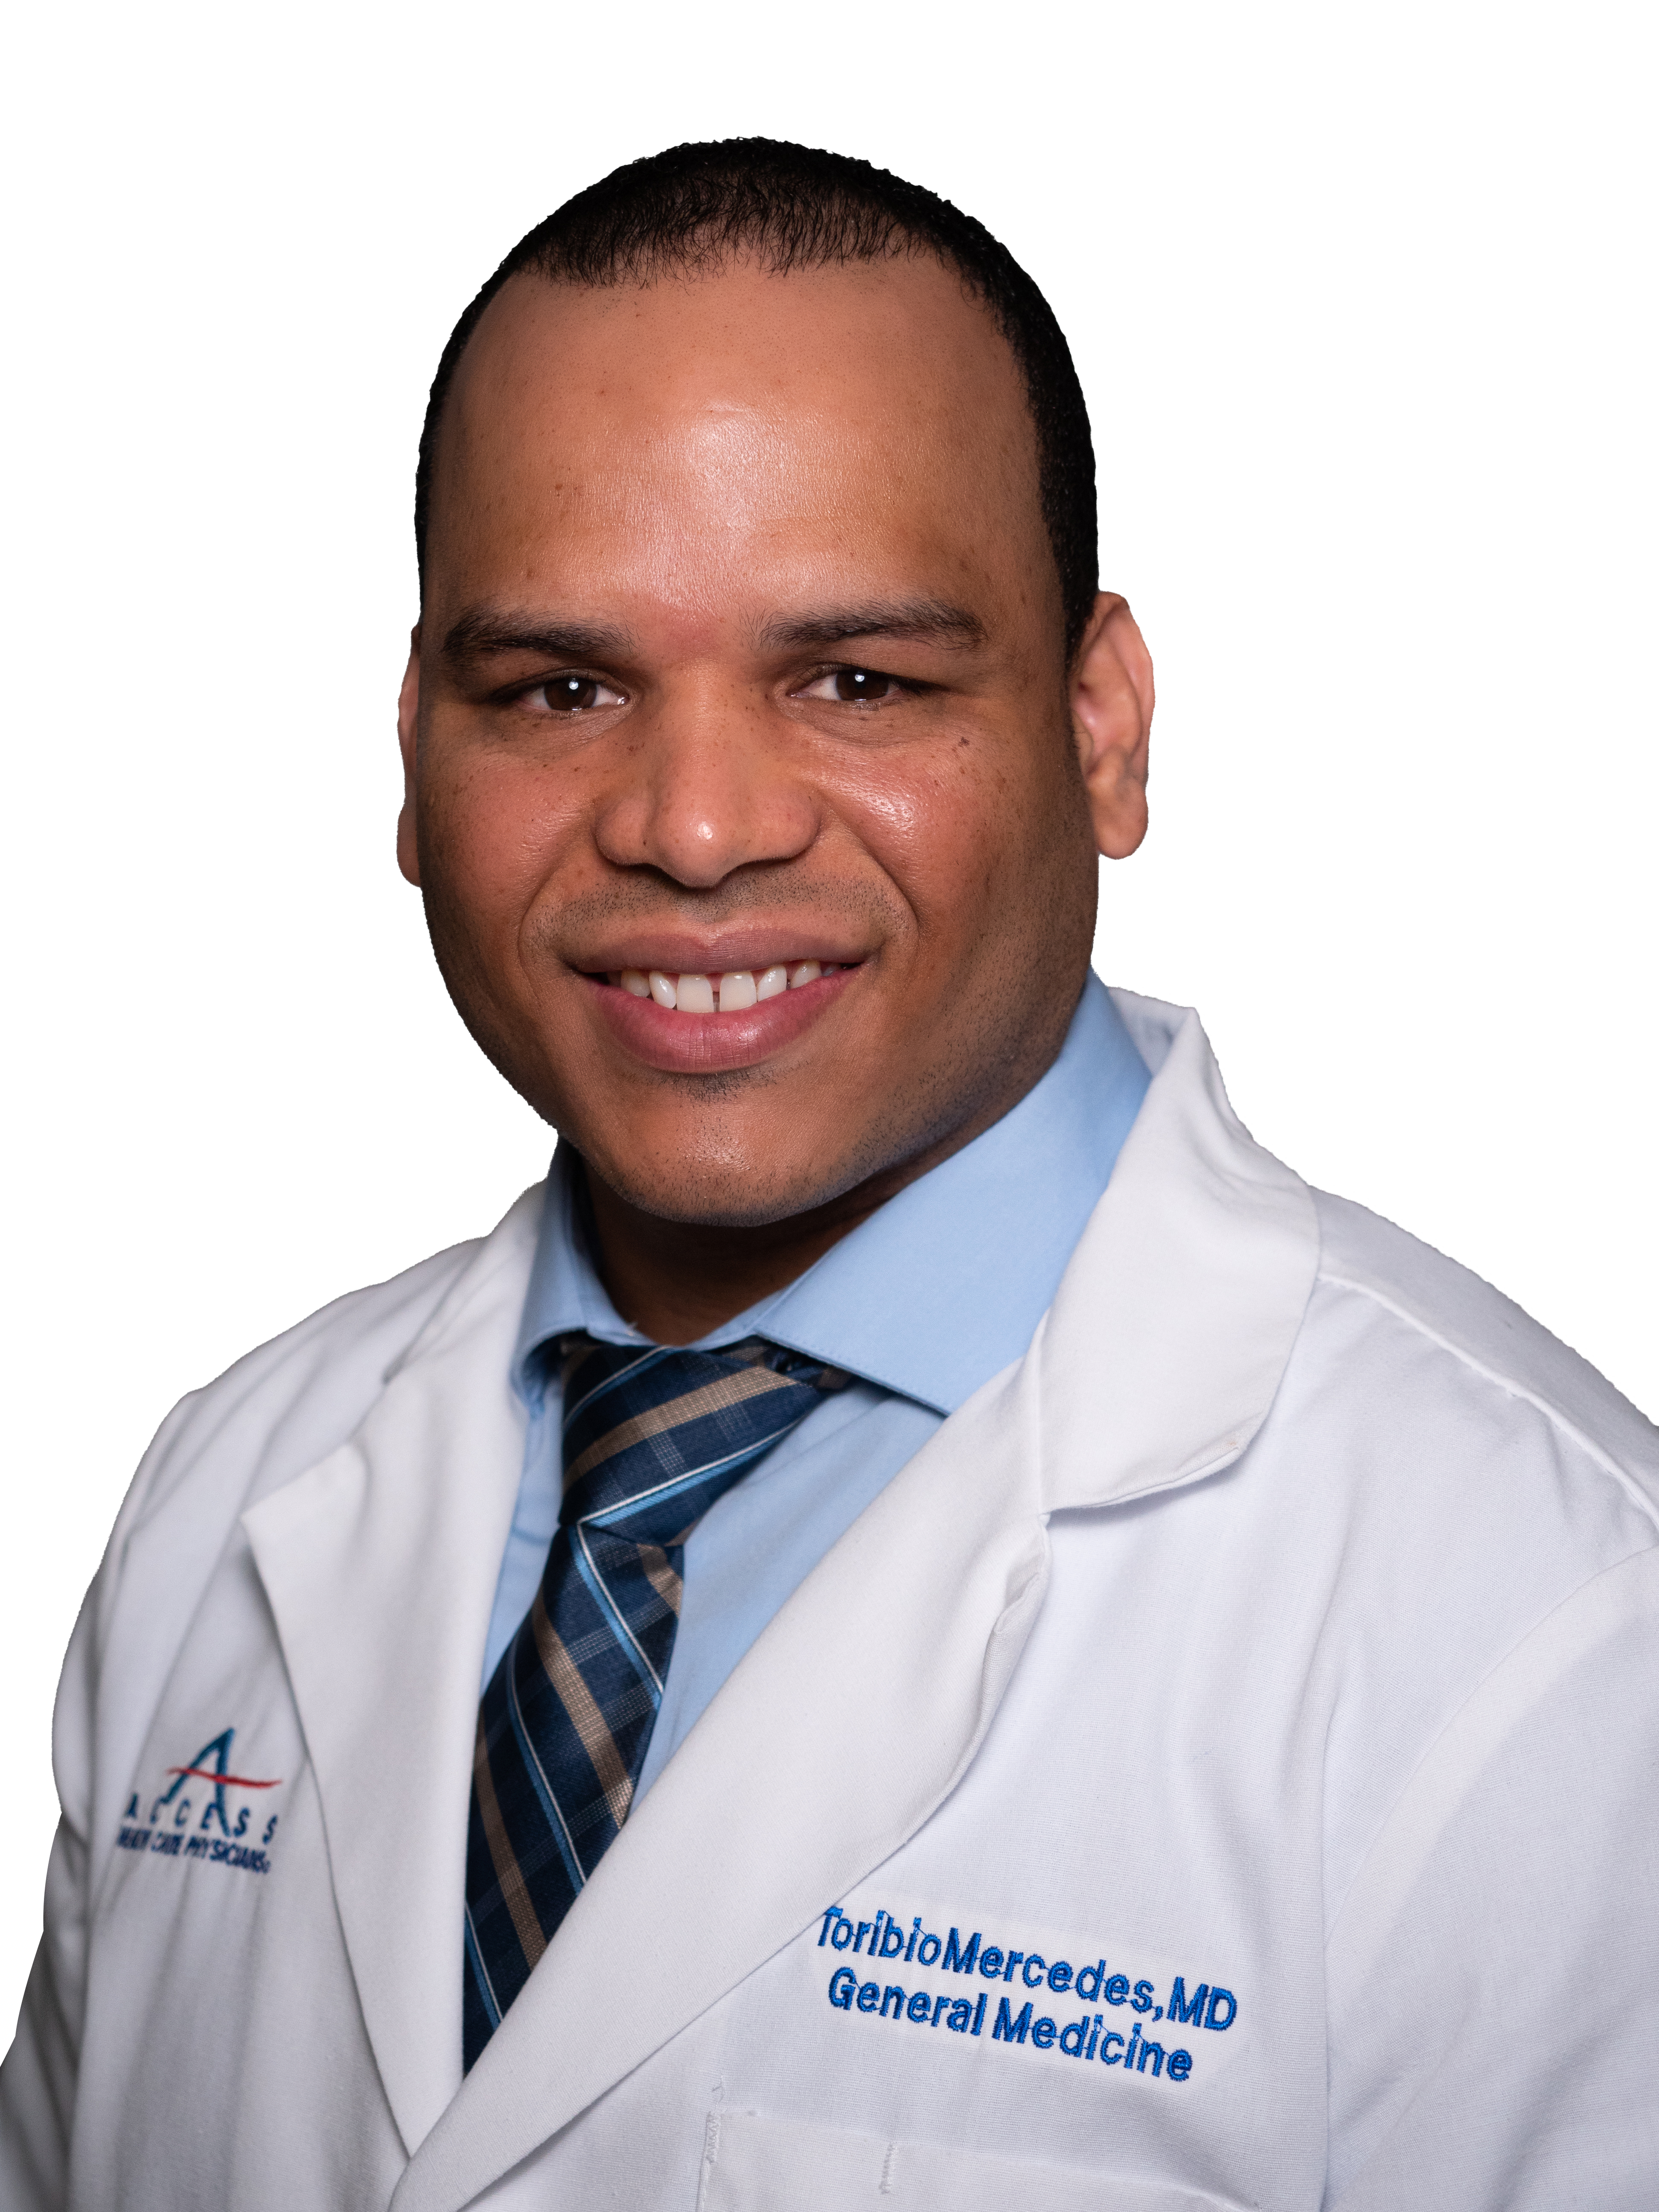 Toribio Mercedes Encarnacion, MD - Family Medicine Specialist at Access